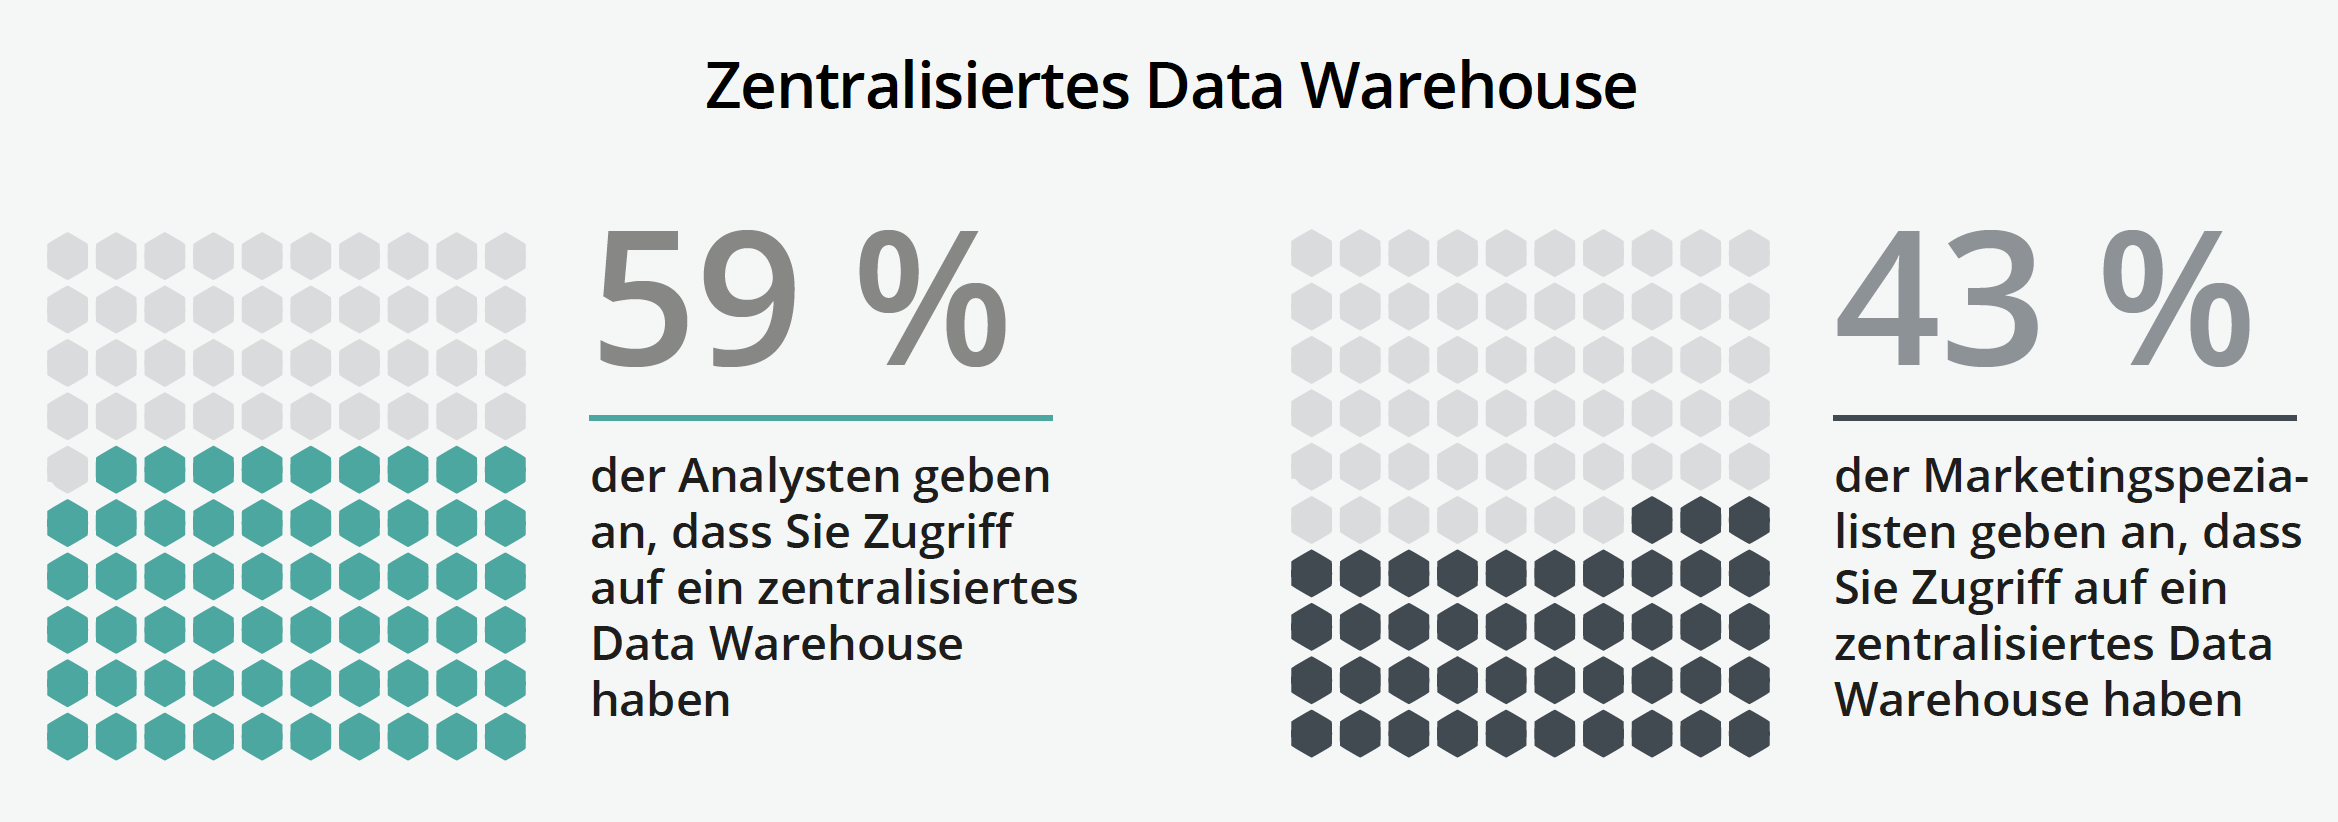 zentralisiertes-data-warehouse